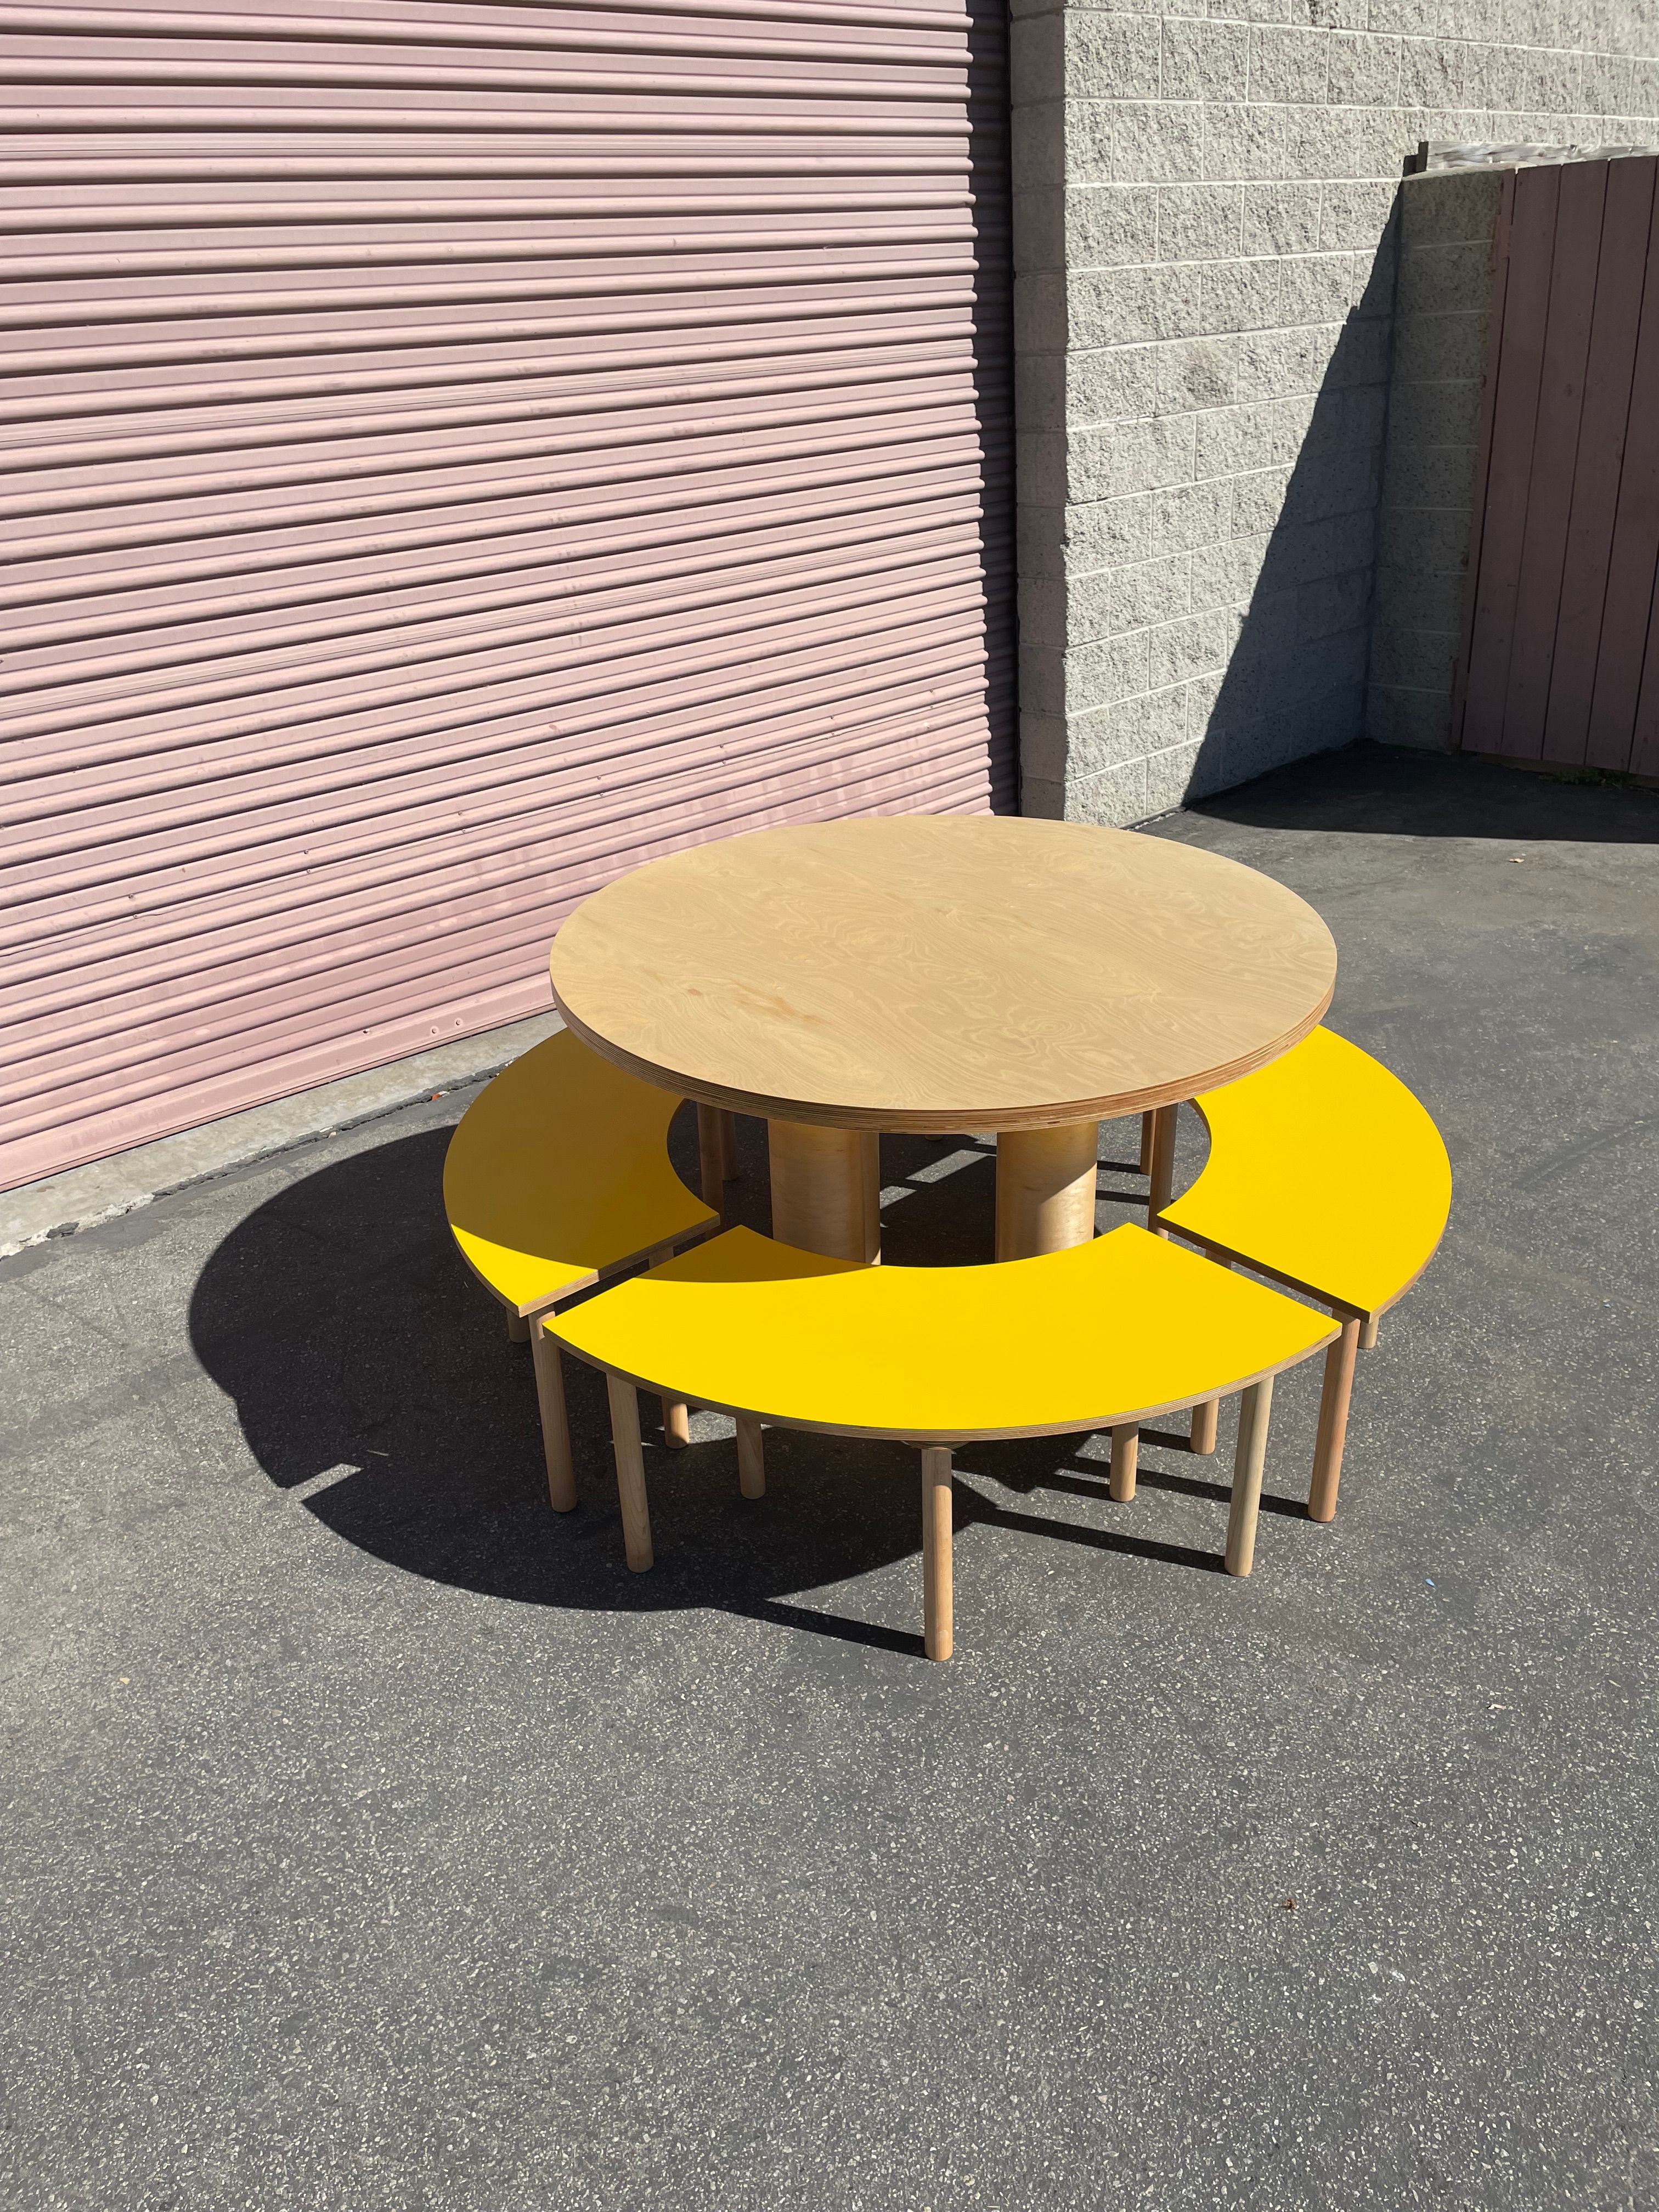  Circle Table + Bench Set II product image 1